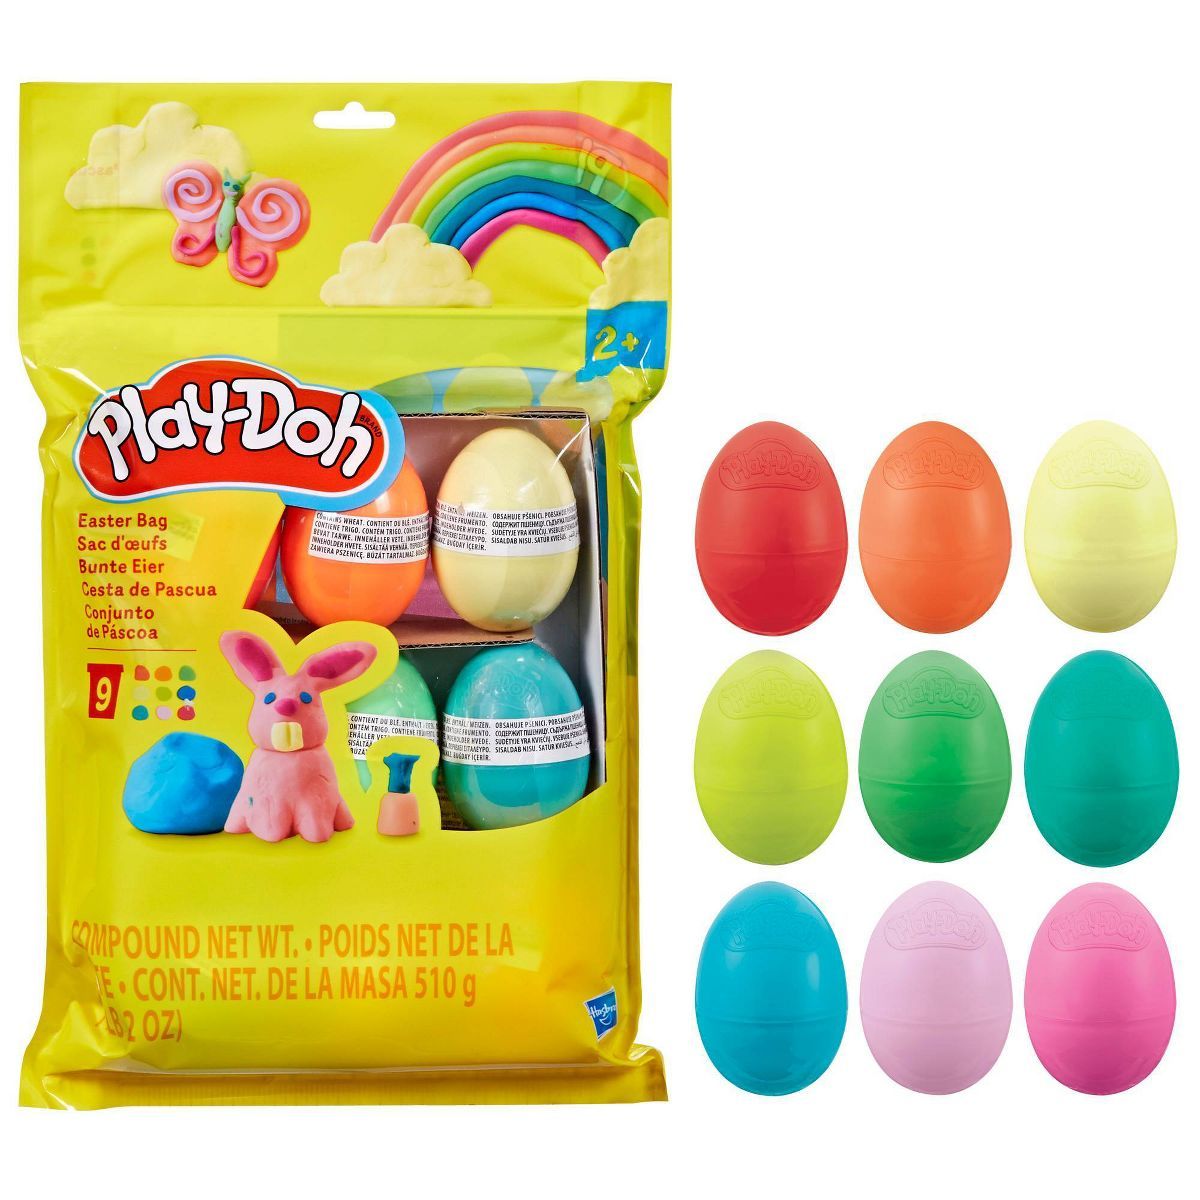 Play-Doh Easter Bag | Target